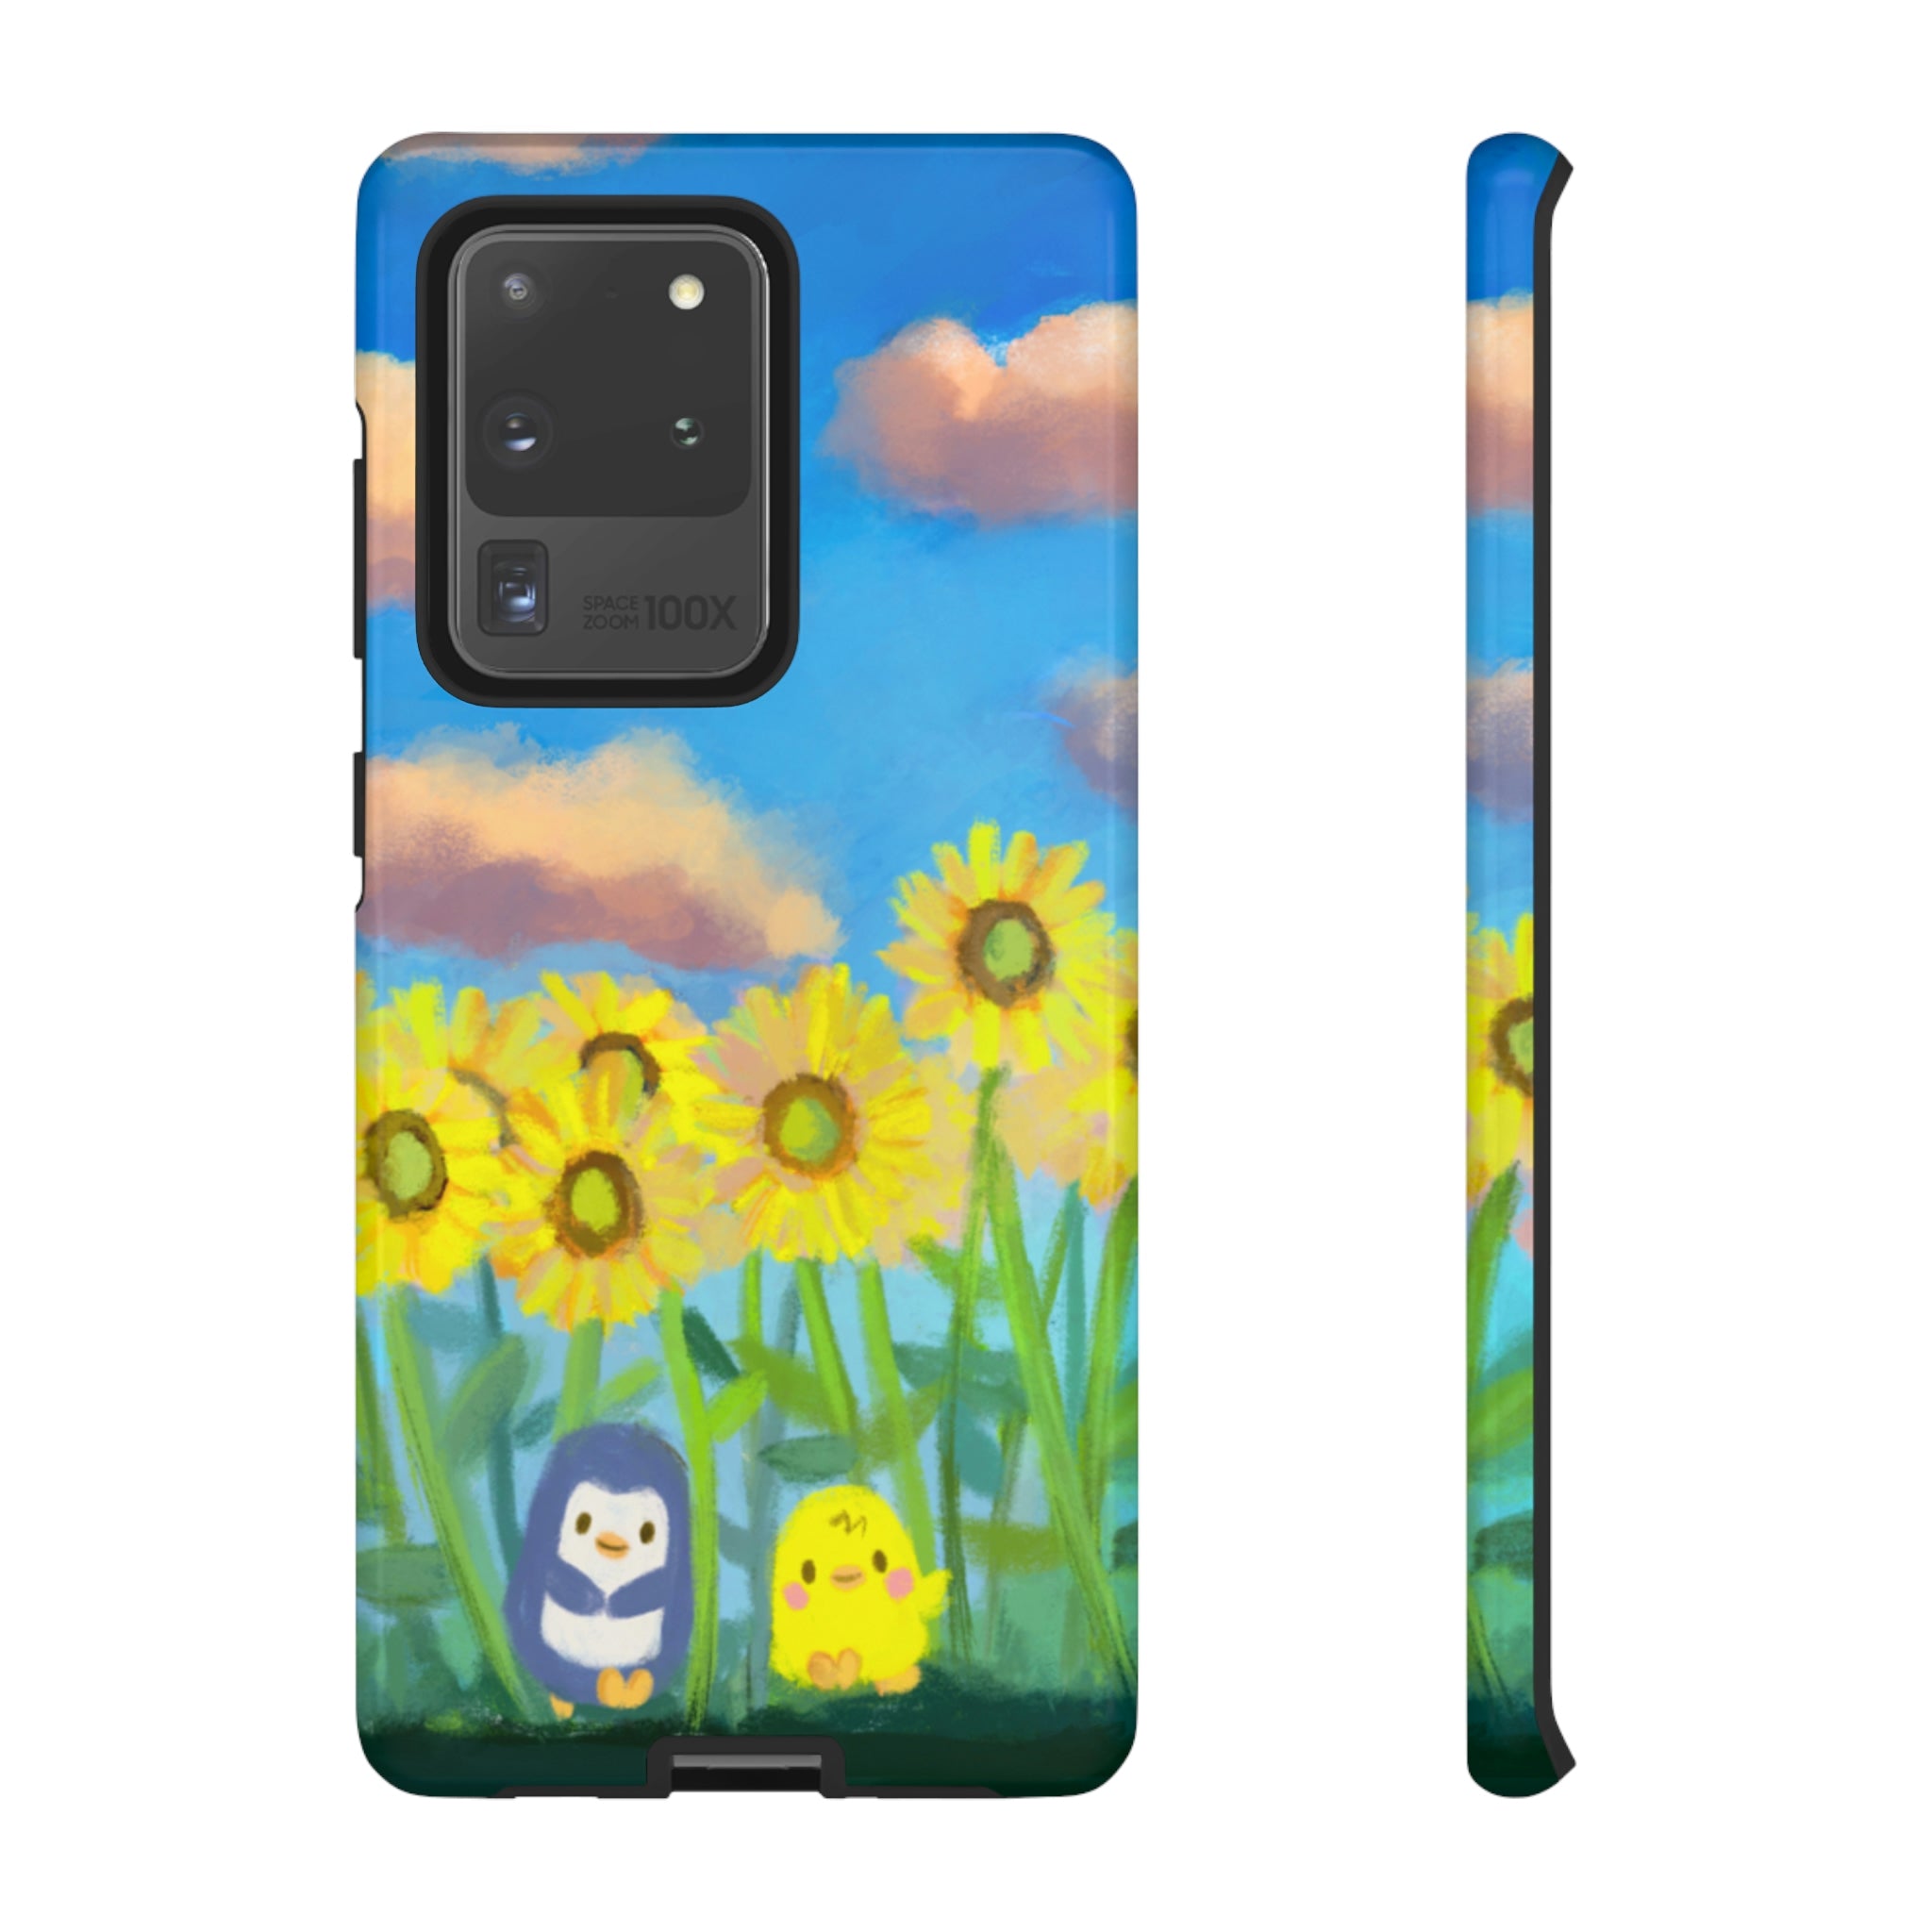 Among the Sunflowers Samsung/Google Phone Case